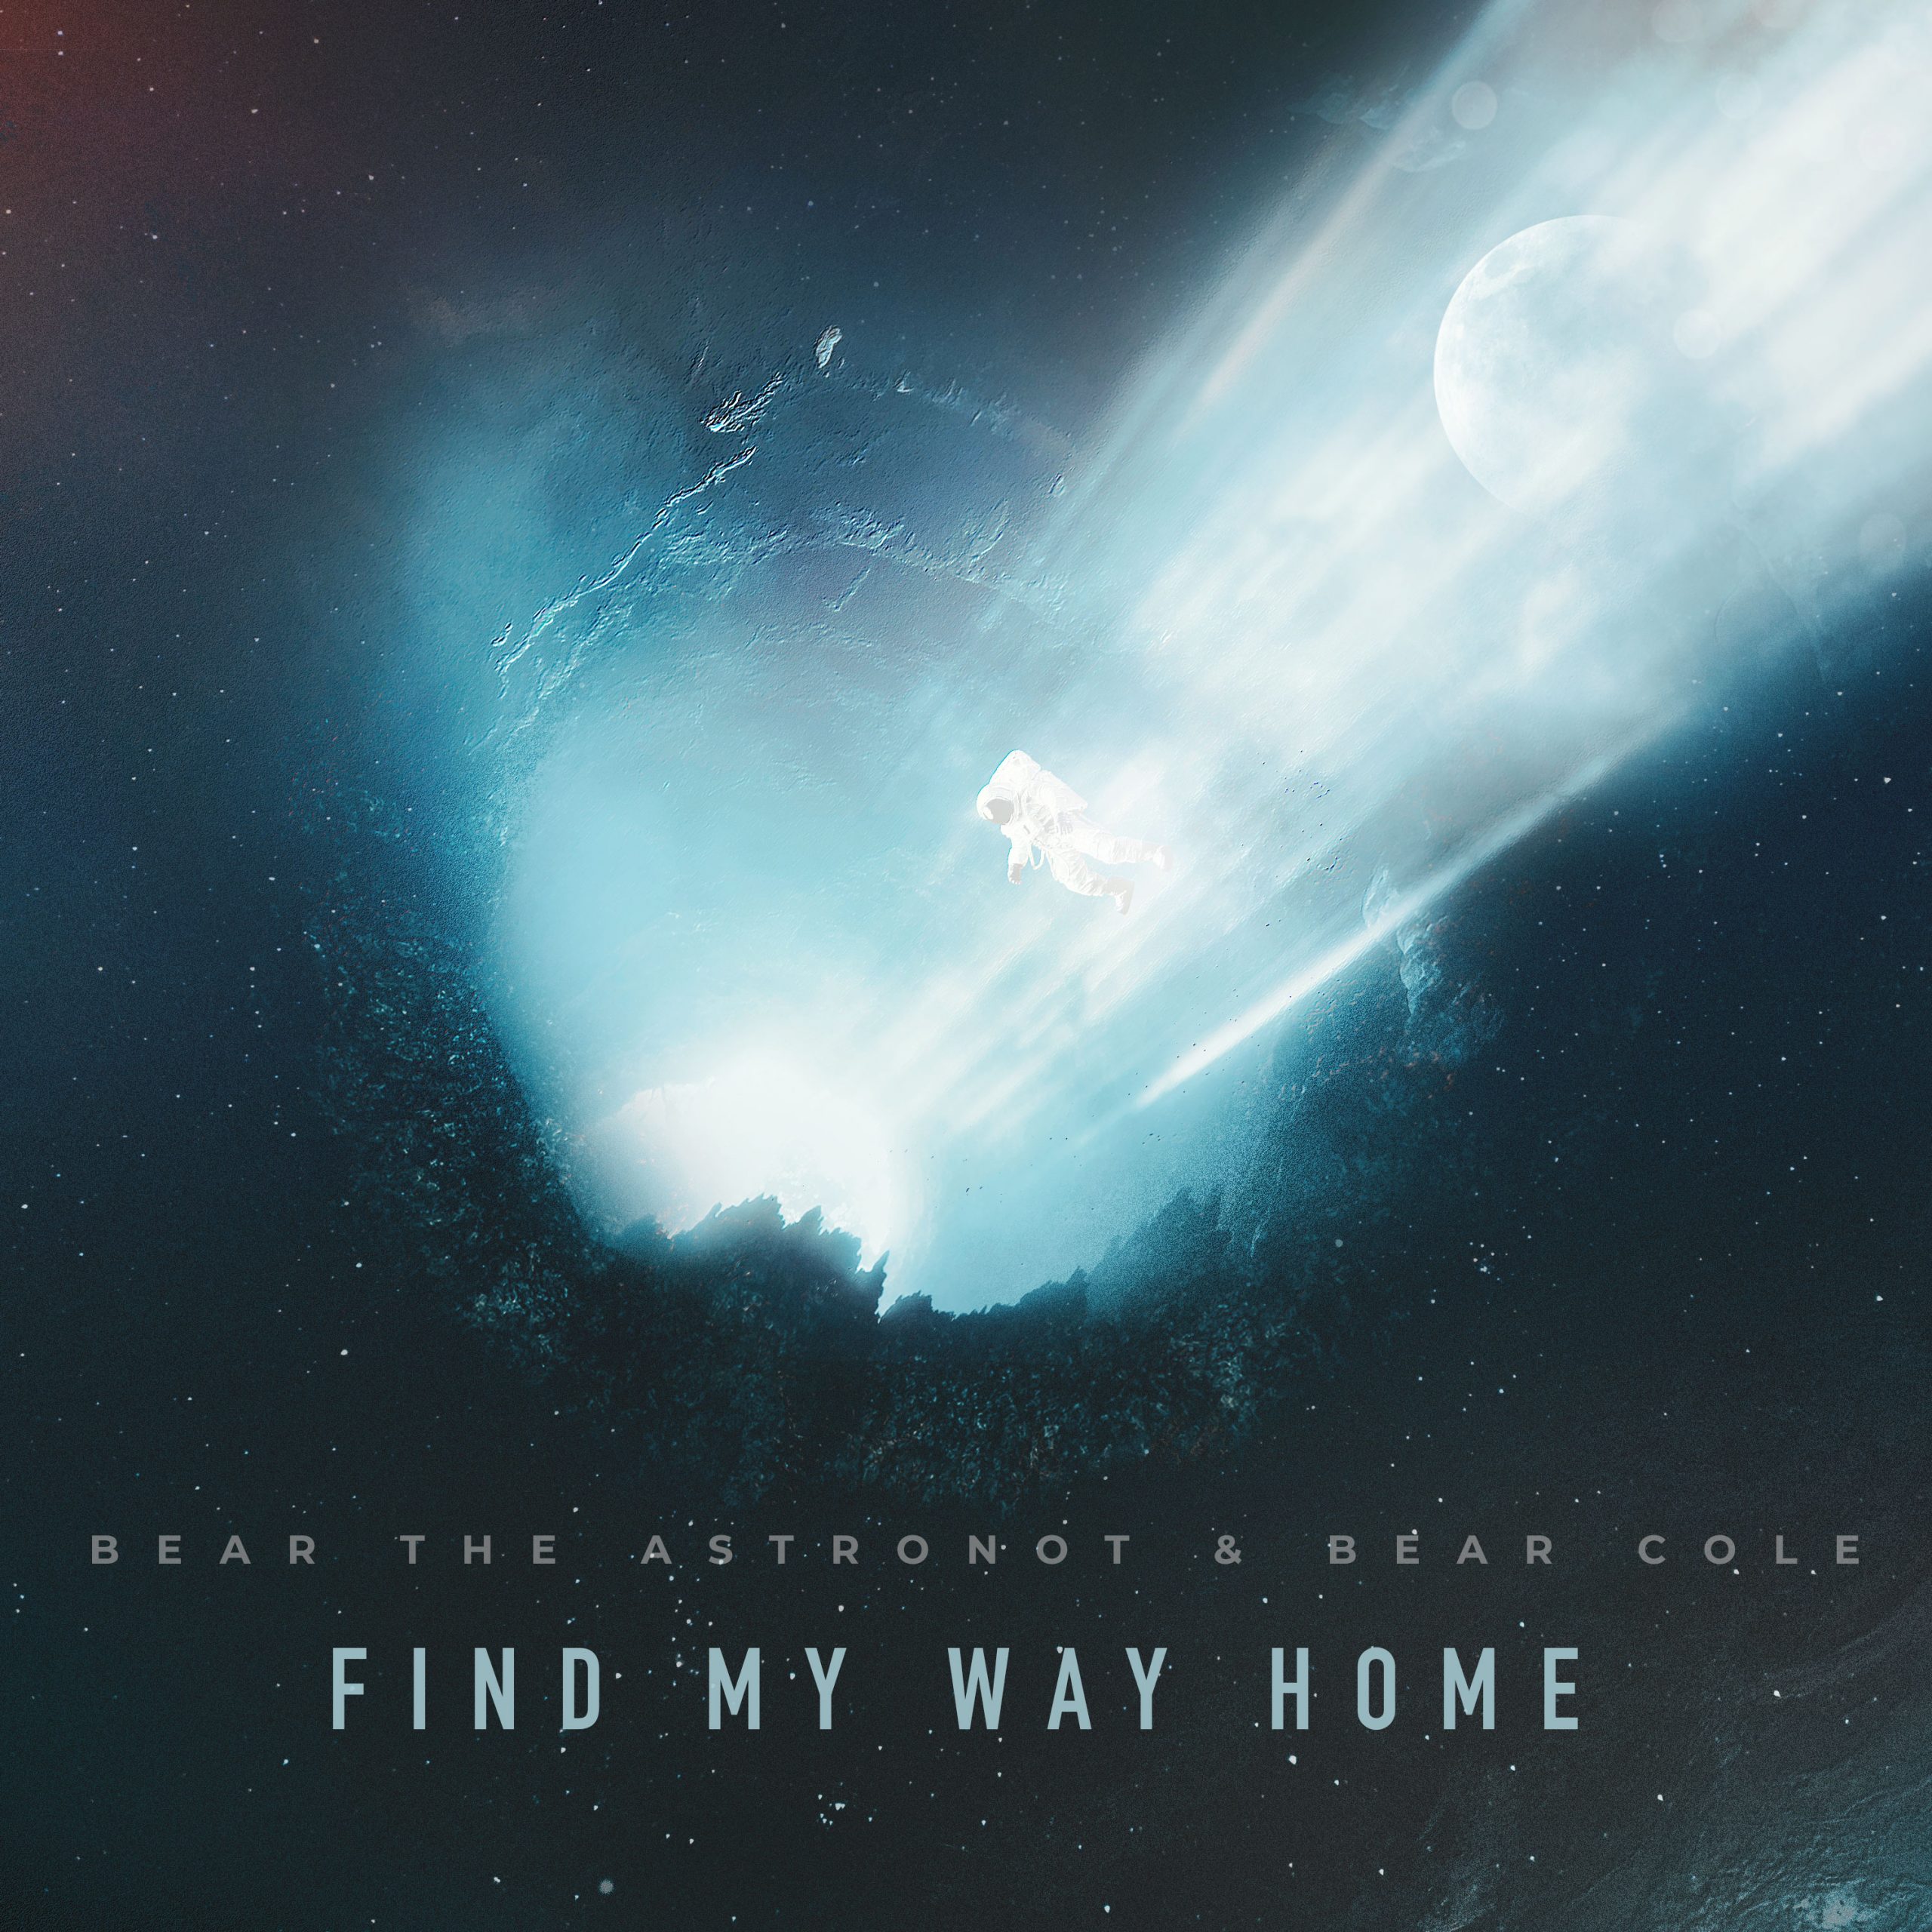 Find My Way Home